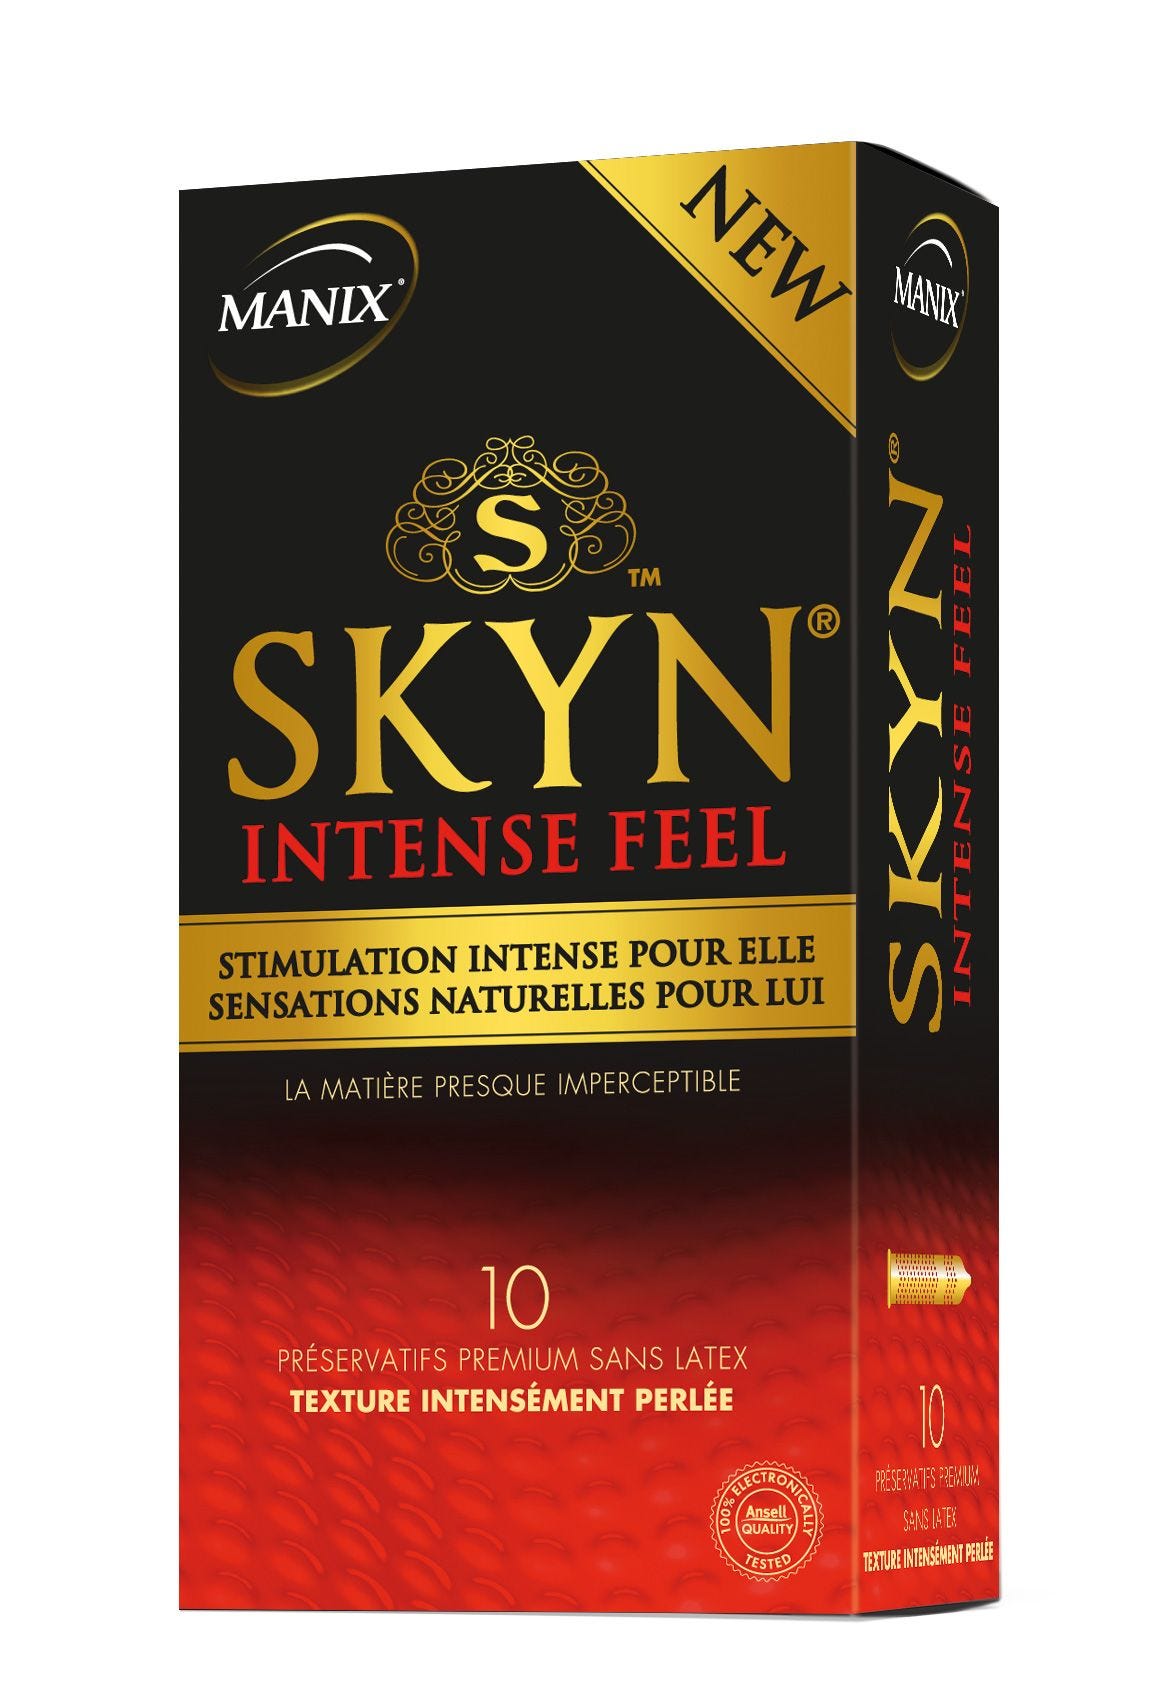 Dorcel - Préservatif Manix Skyn Intense Feel x10 [Bien-être]